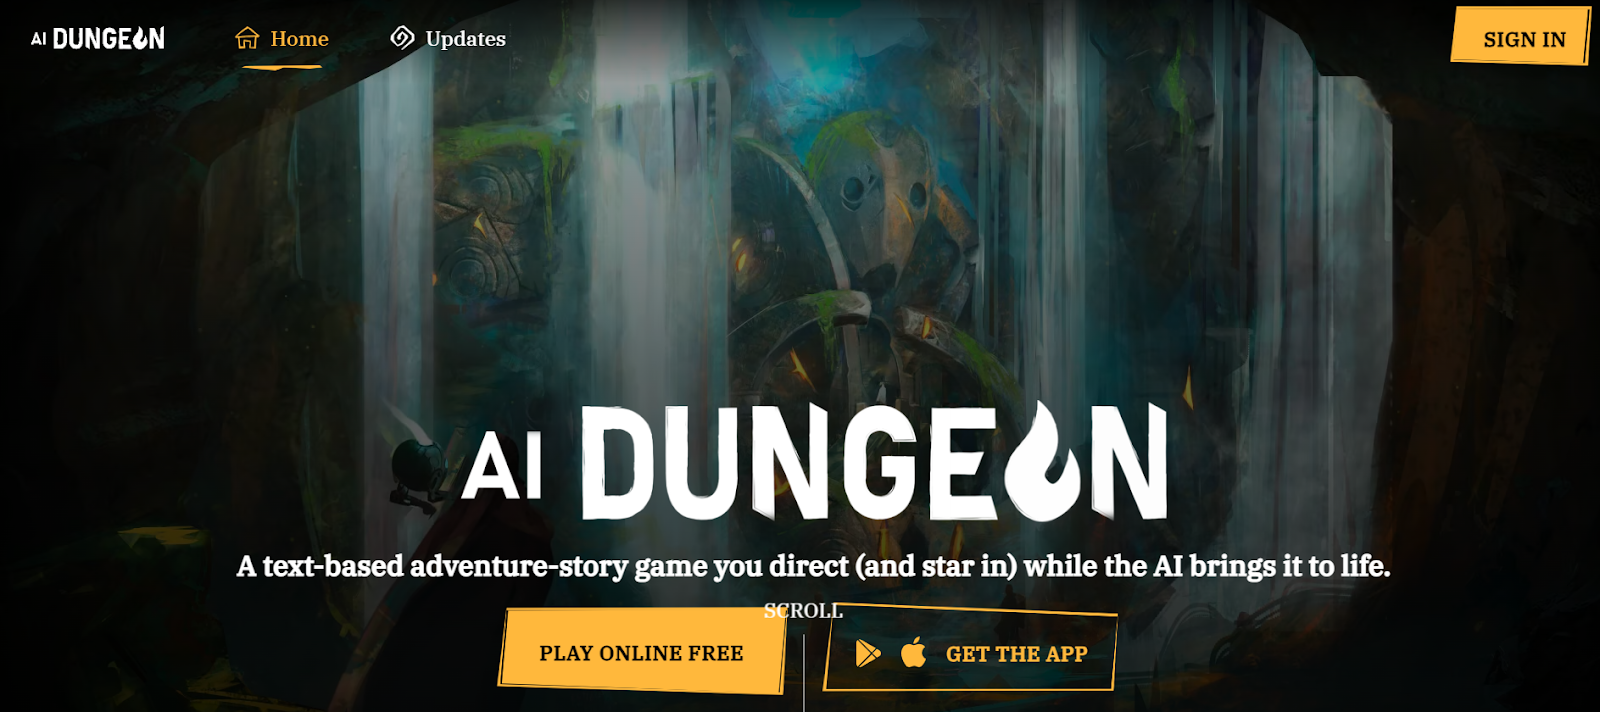 6. AI Dungeon